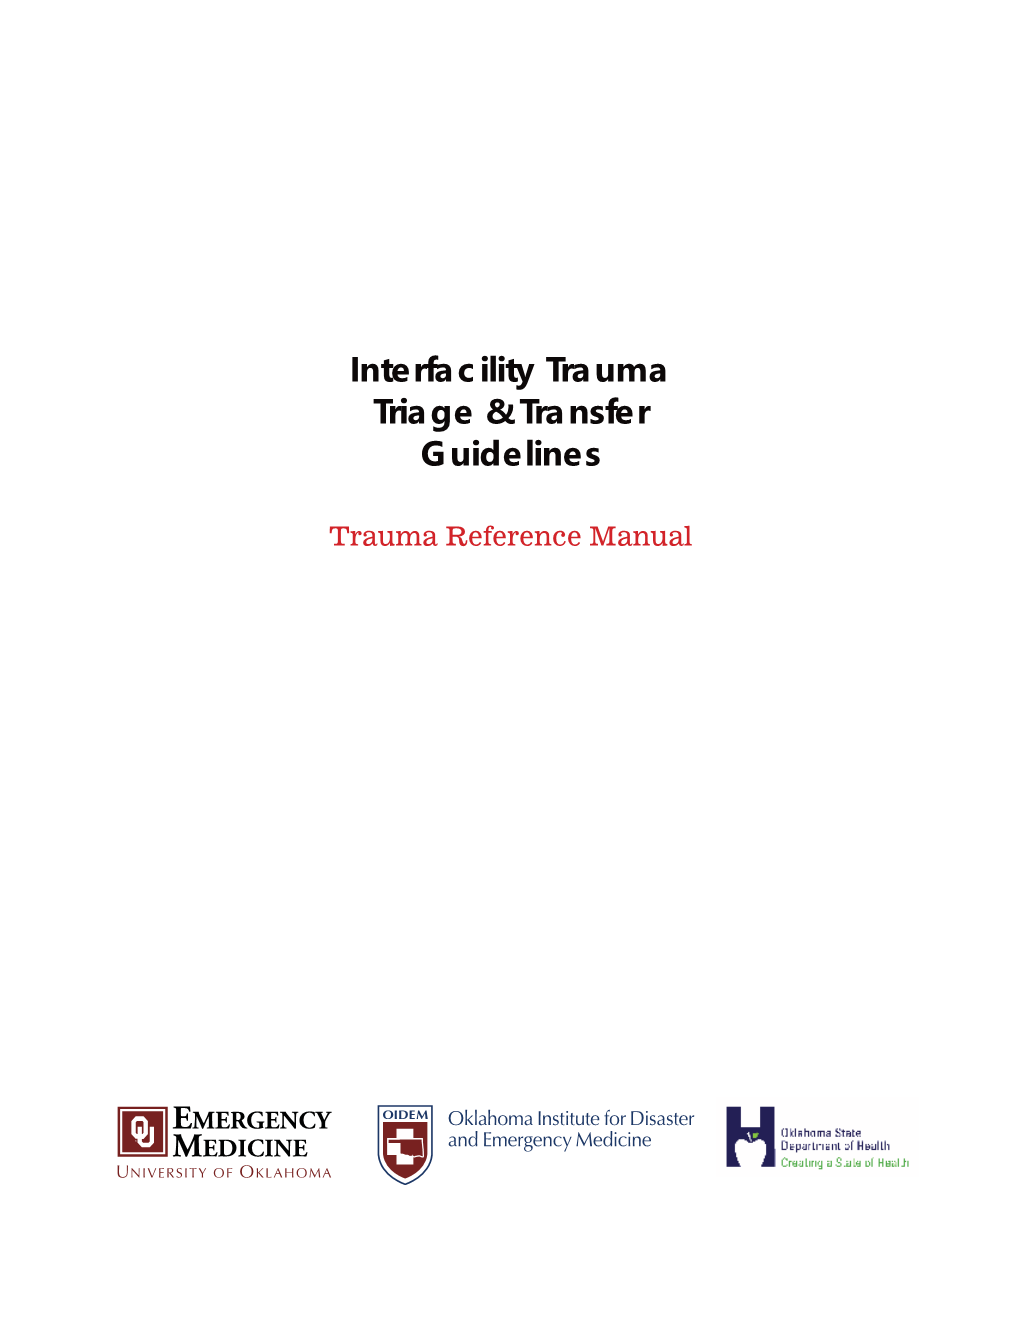 Interfacility Trauma Triage & Transfer Guidelines